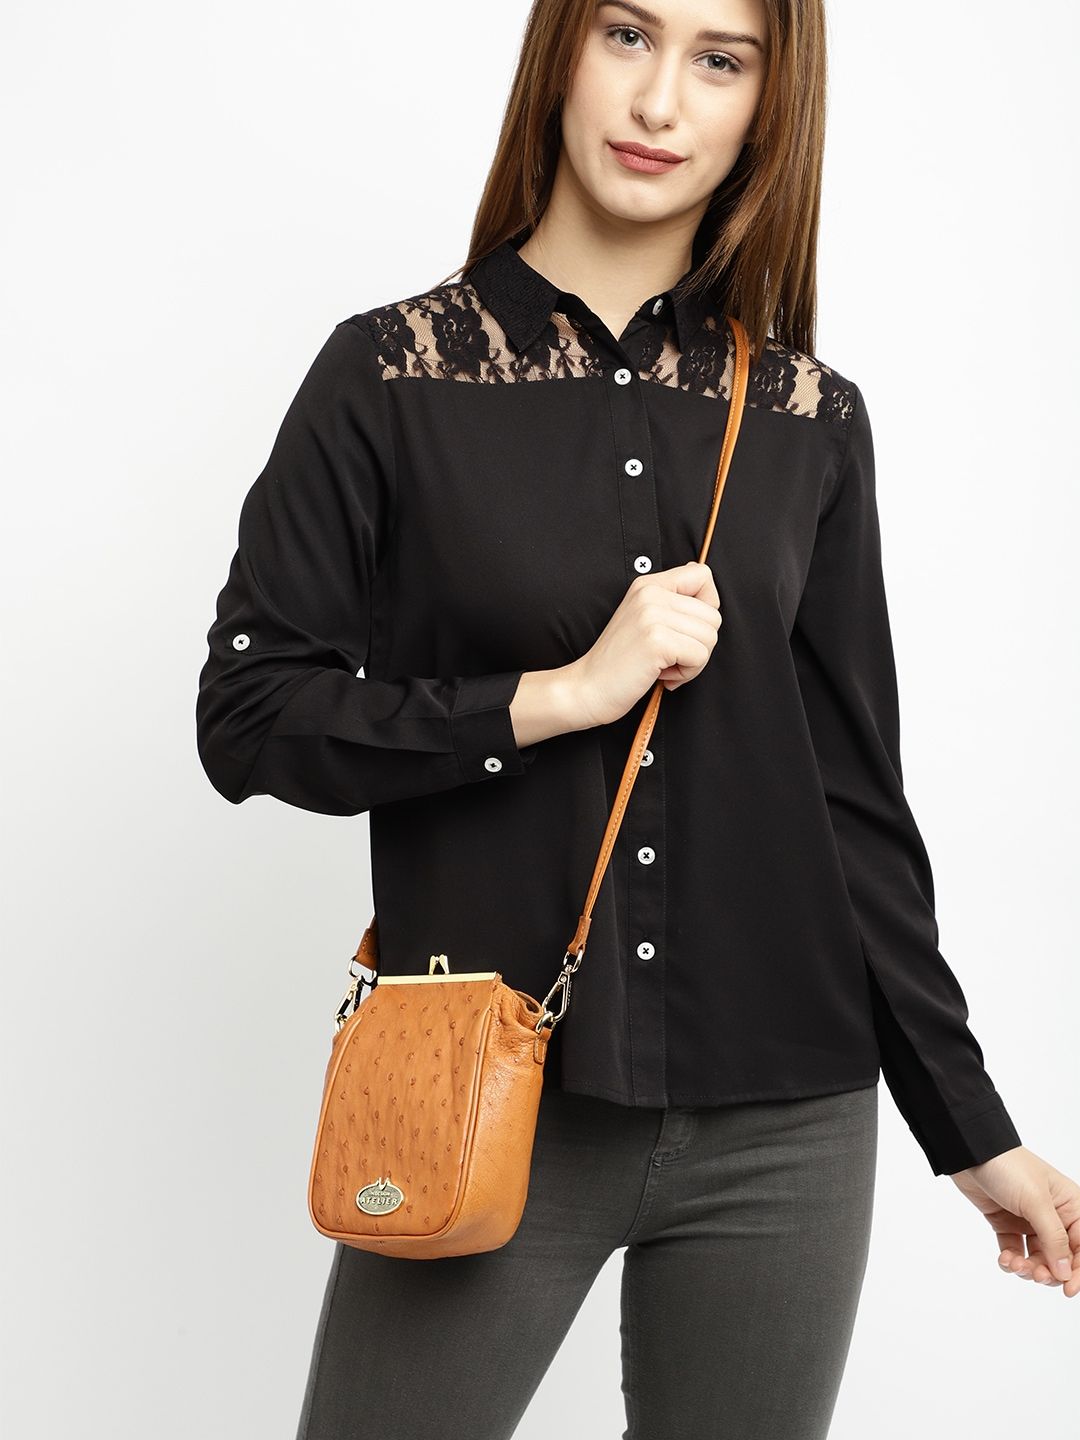 Amazon - Hidesign Tan Brown Textured Leather Sling Bag Price